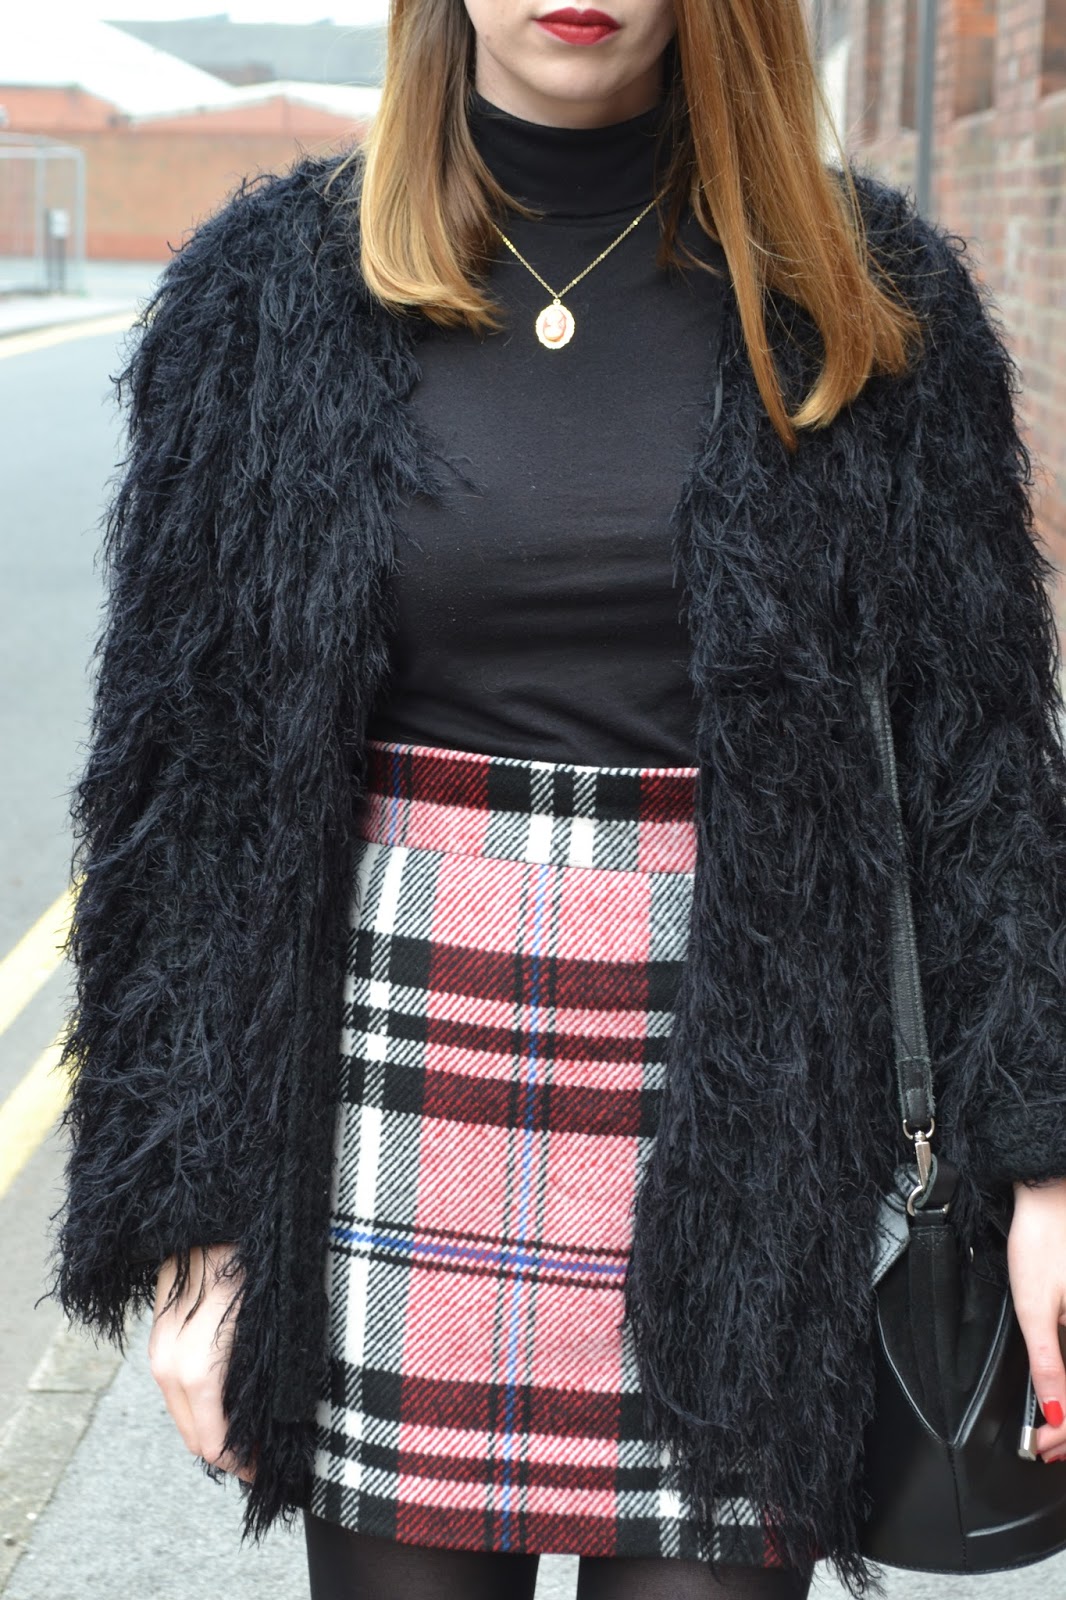 womens affordable highstreet fashion blog featuring British street style. Black polo neck. Topshop tartan skirt. Leather black buckle boots from Kurt Geiger. Black shabby jacket. Hollies closet